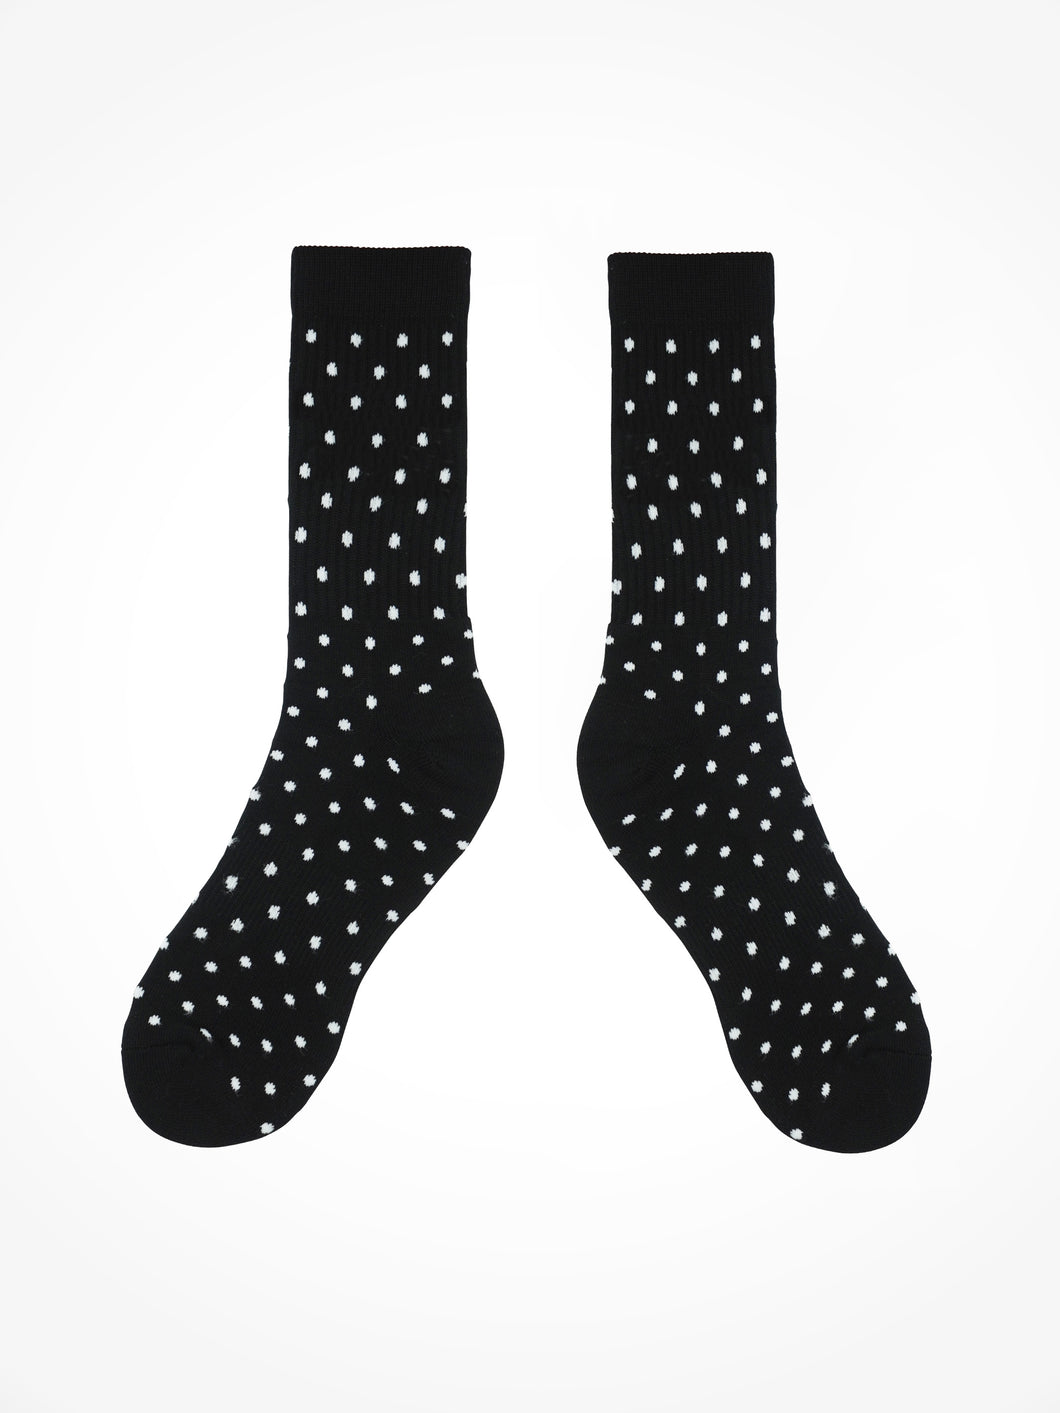 Black with White Polka Dots Socks